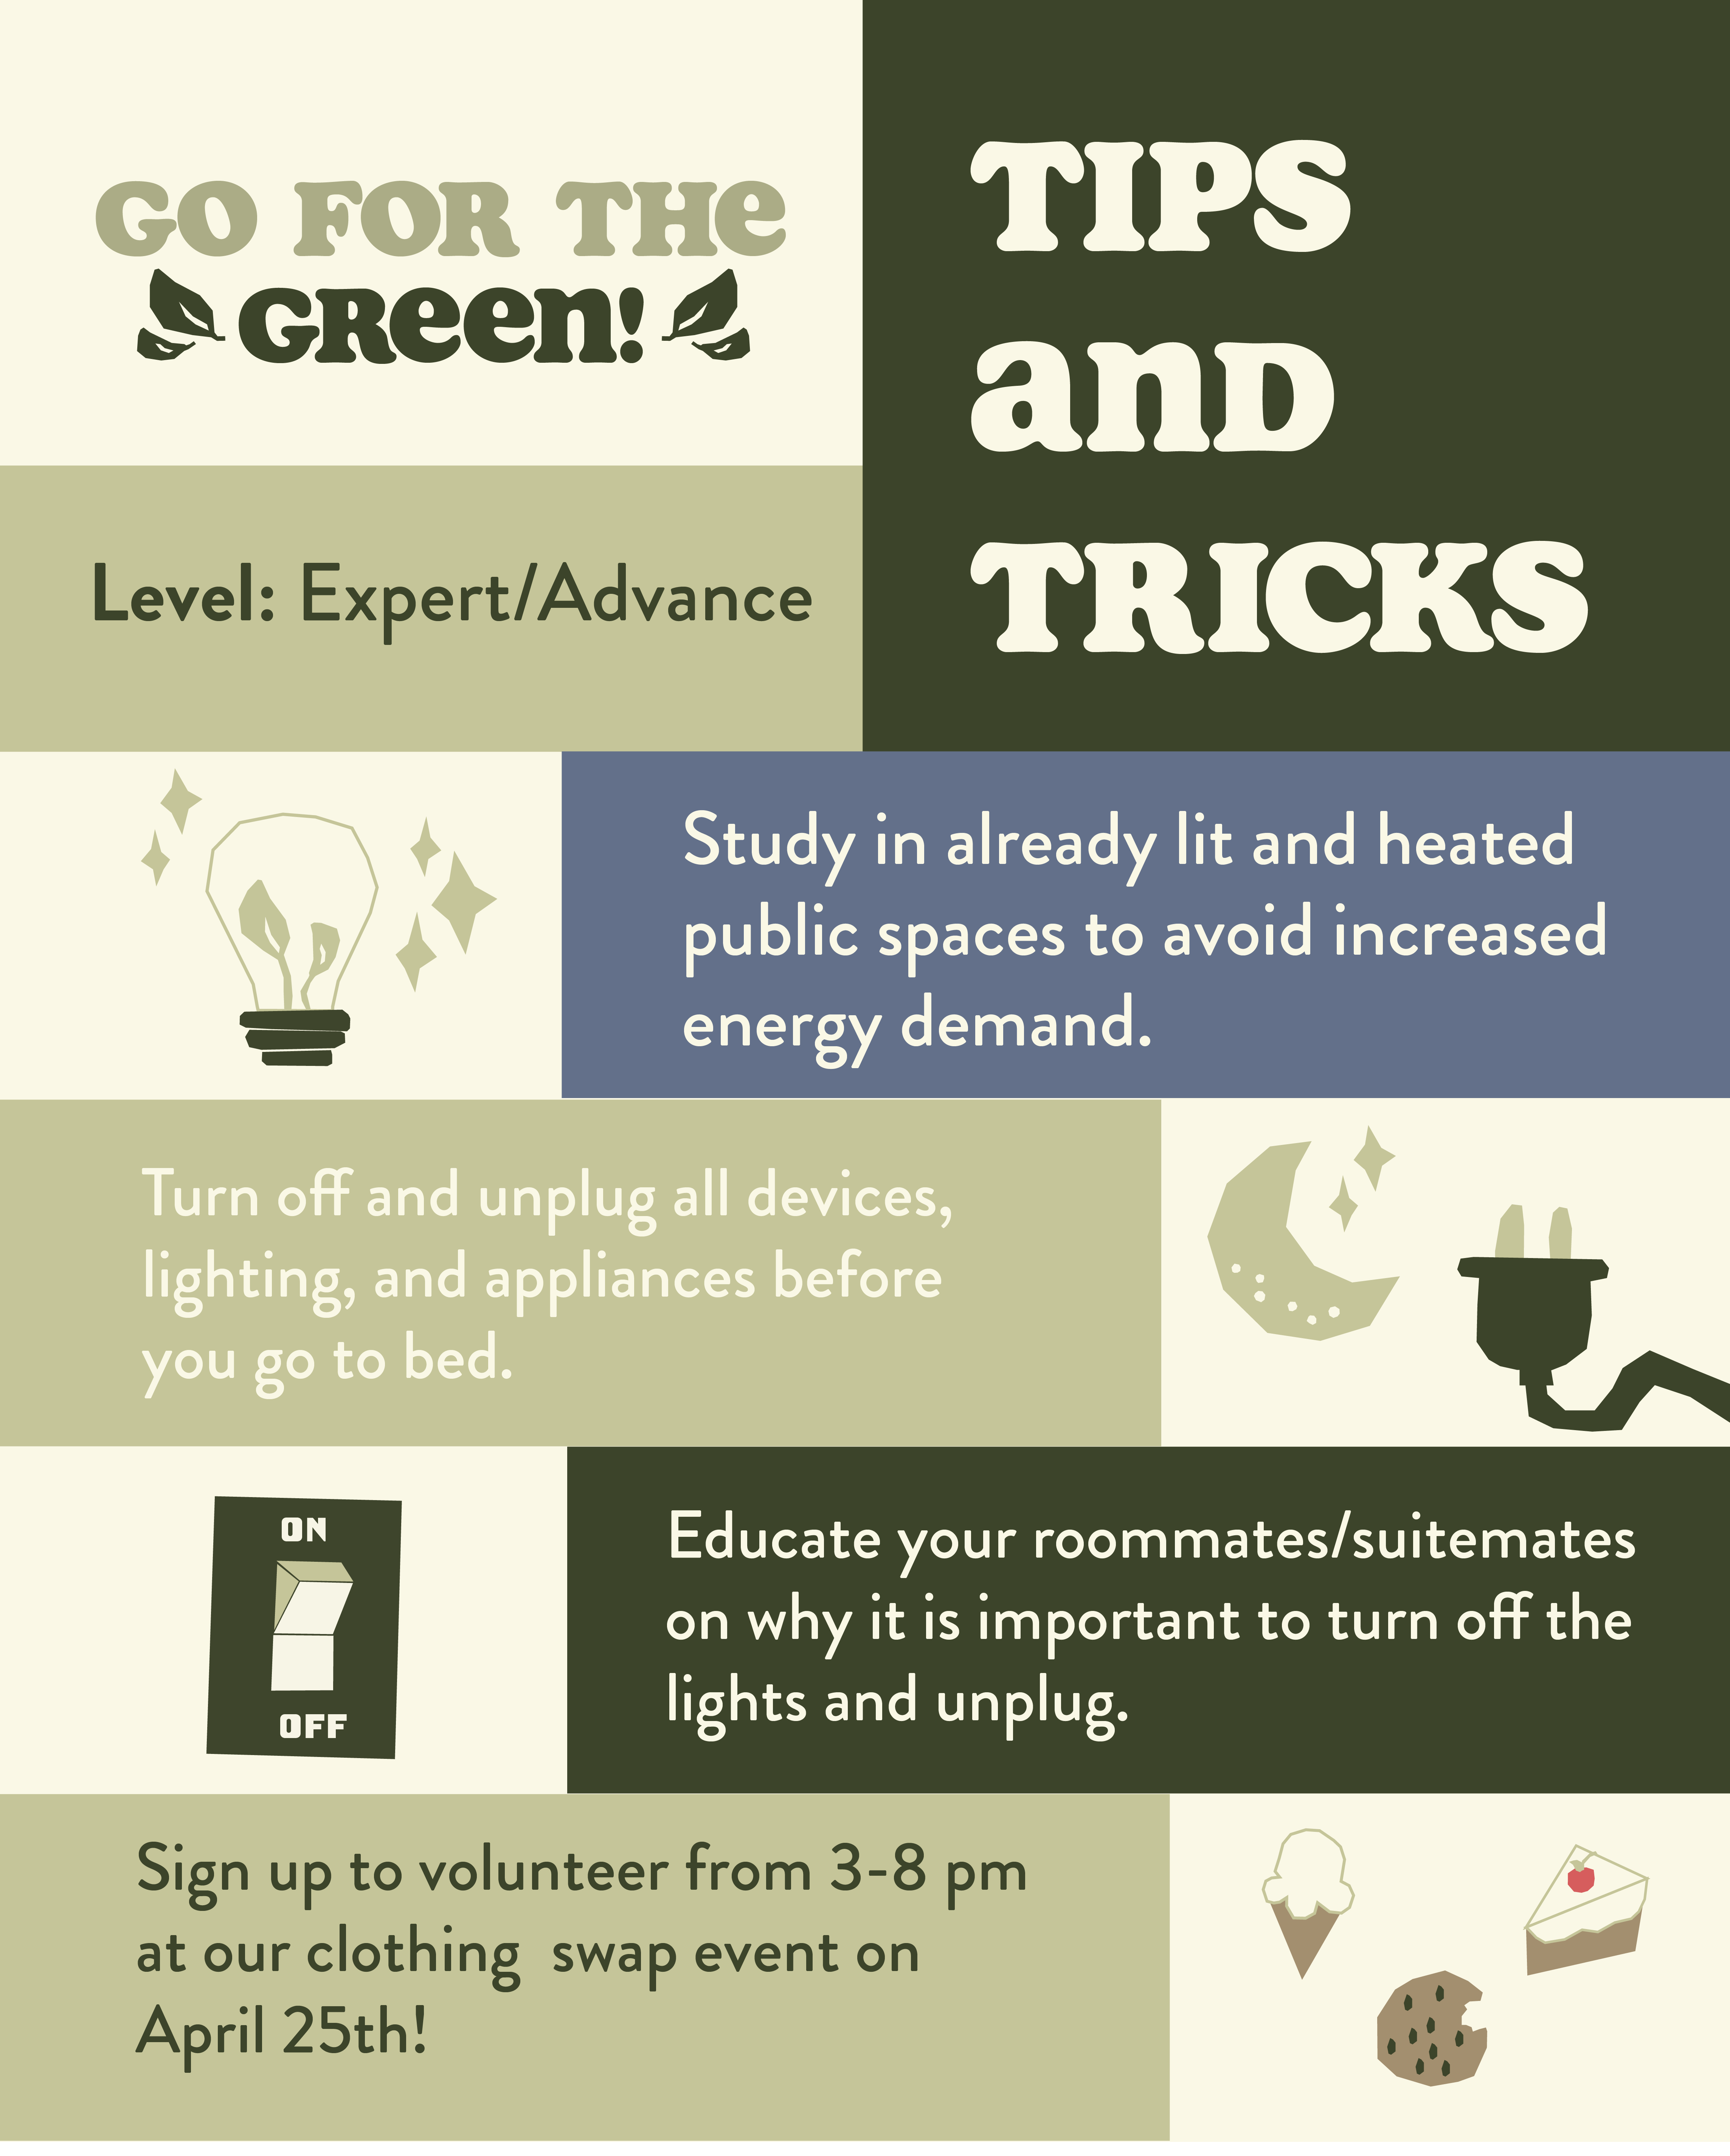 Go for the Green expert tips